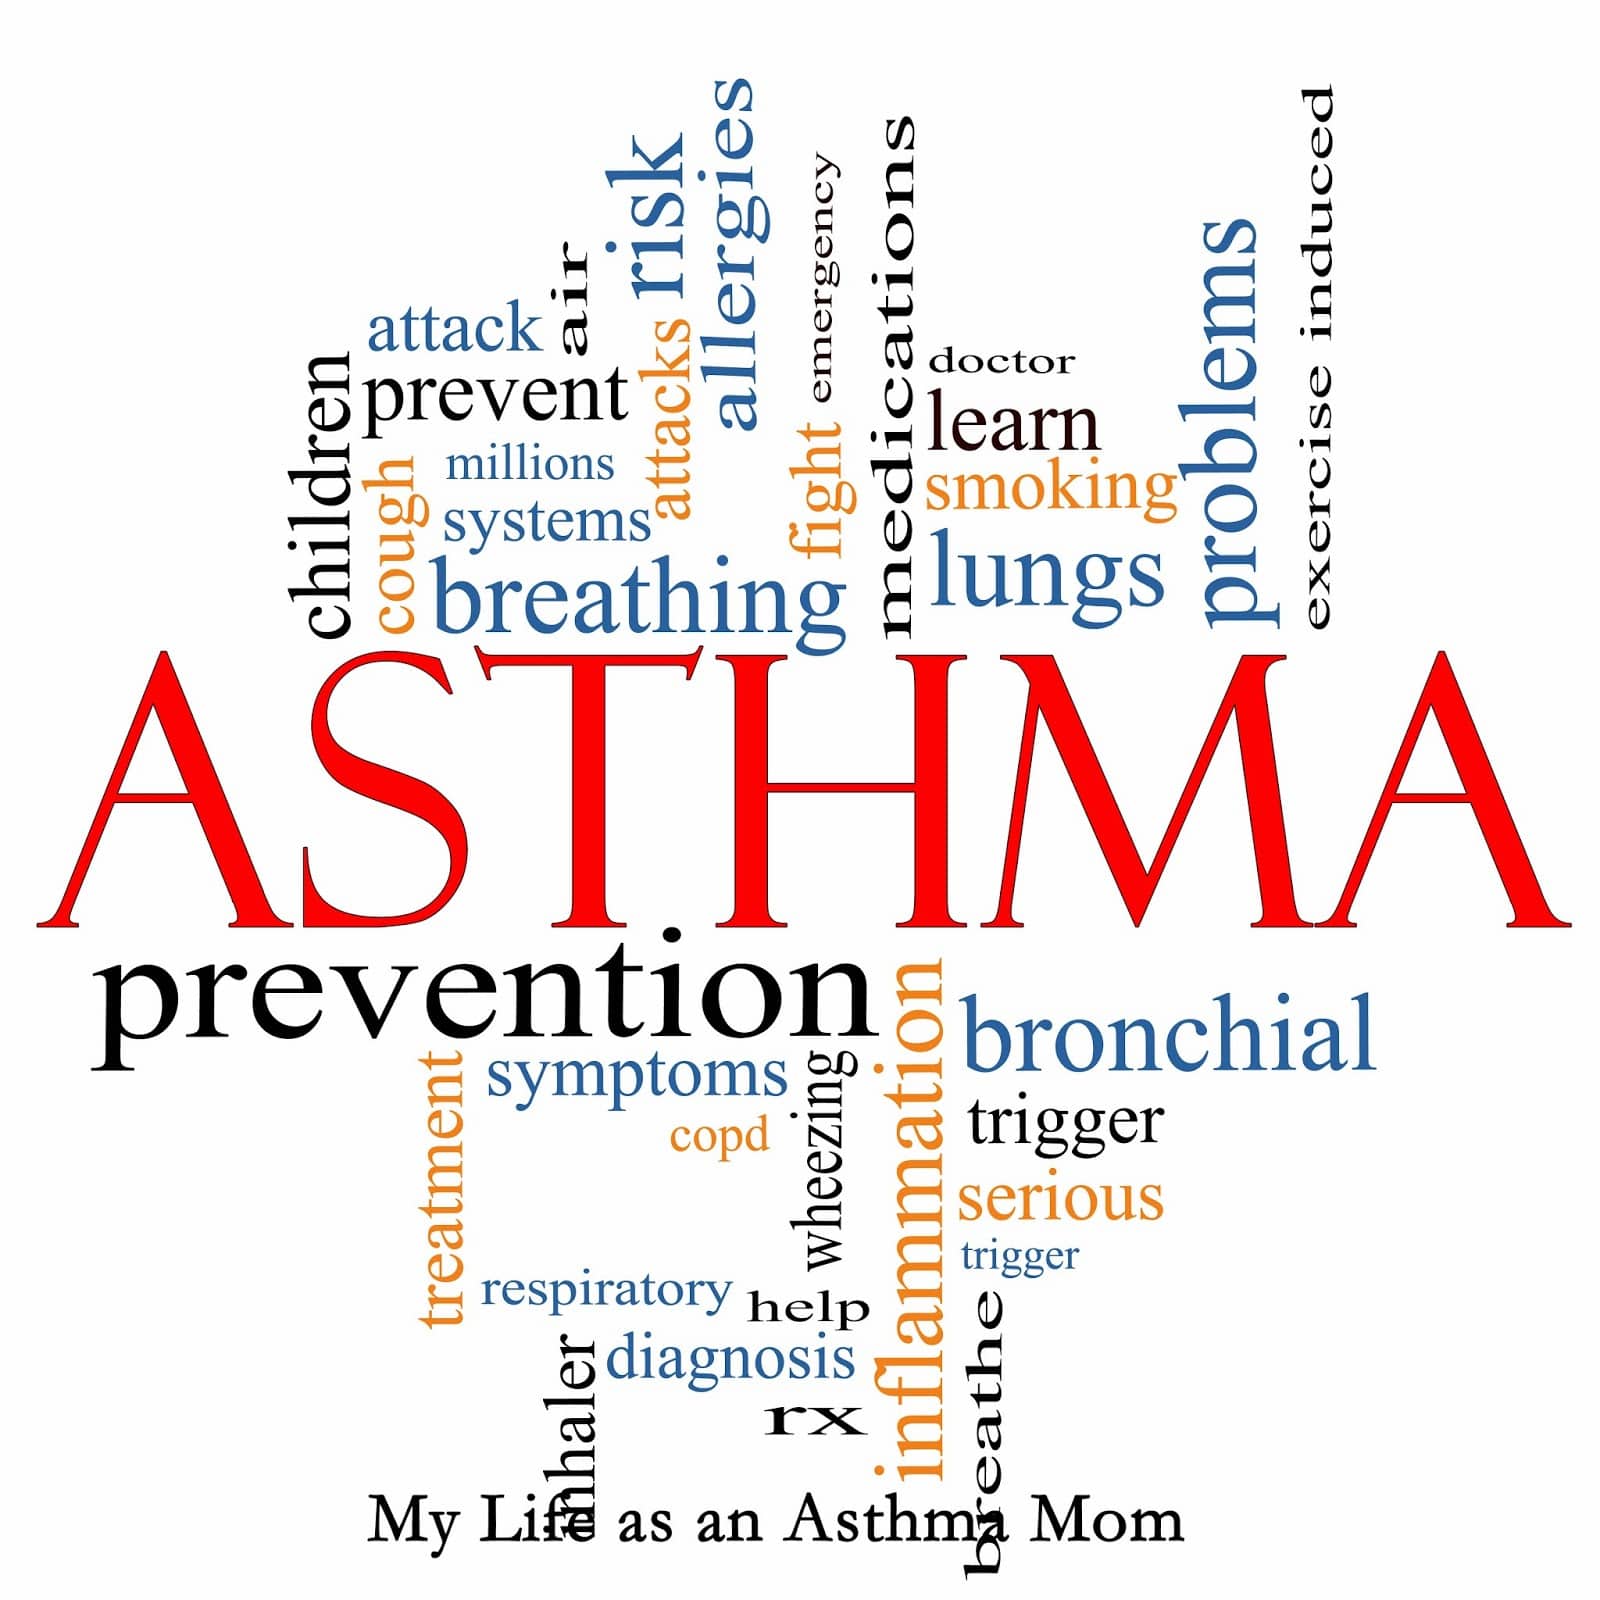 My Life as an Asthma Mom: Can kids outgrow asthma?